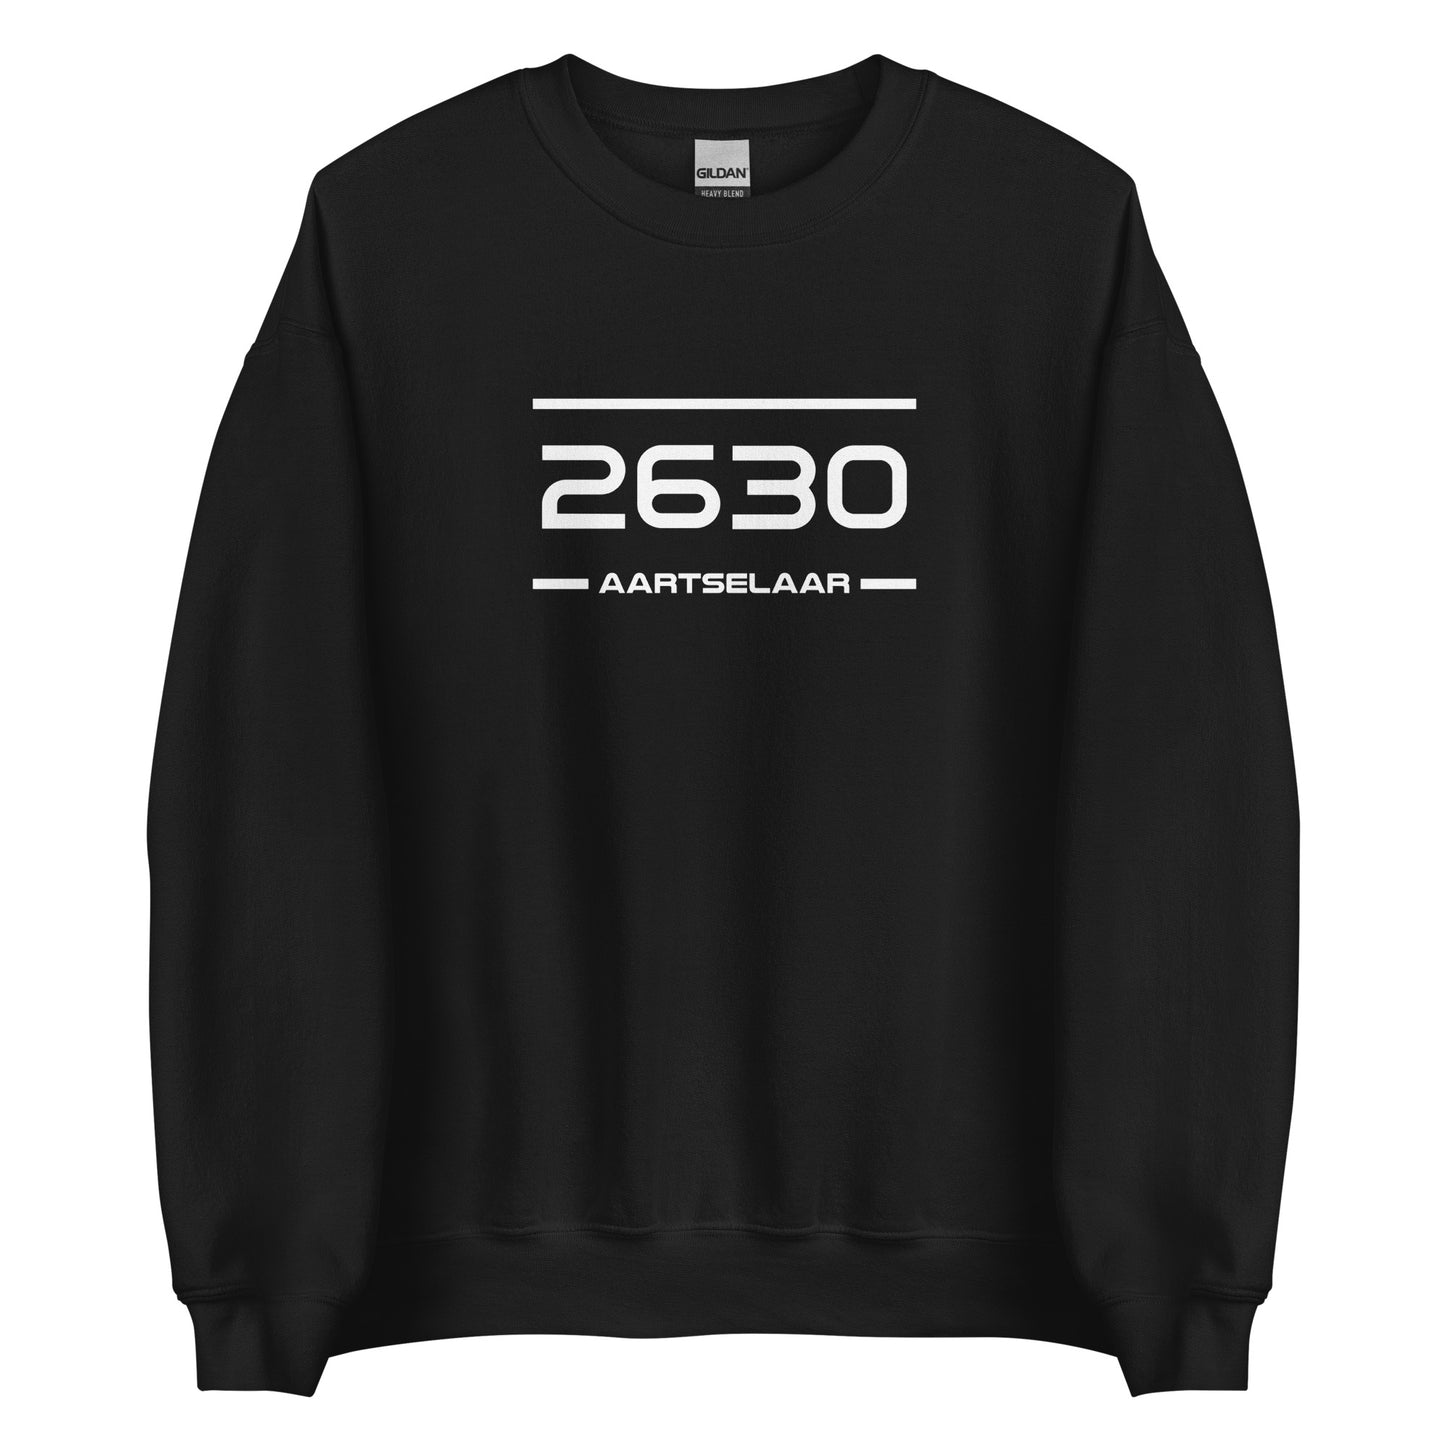 Sweater - 2630 - Aartselaar (M/V)